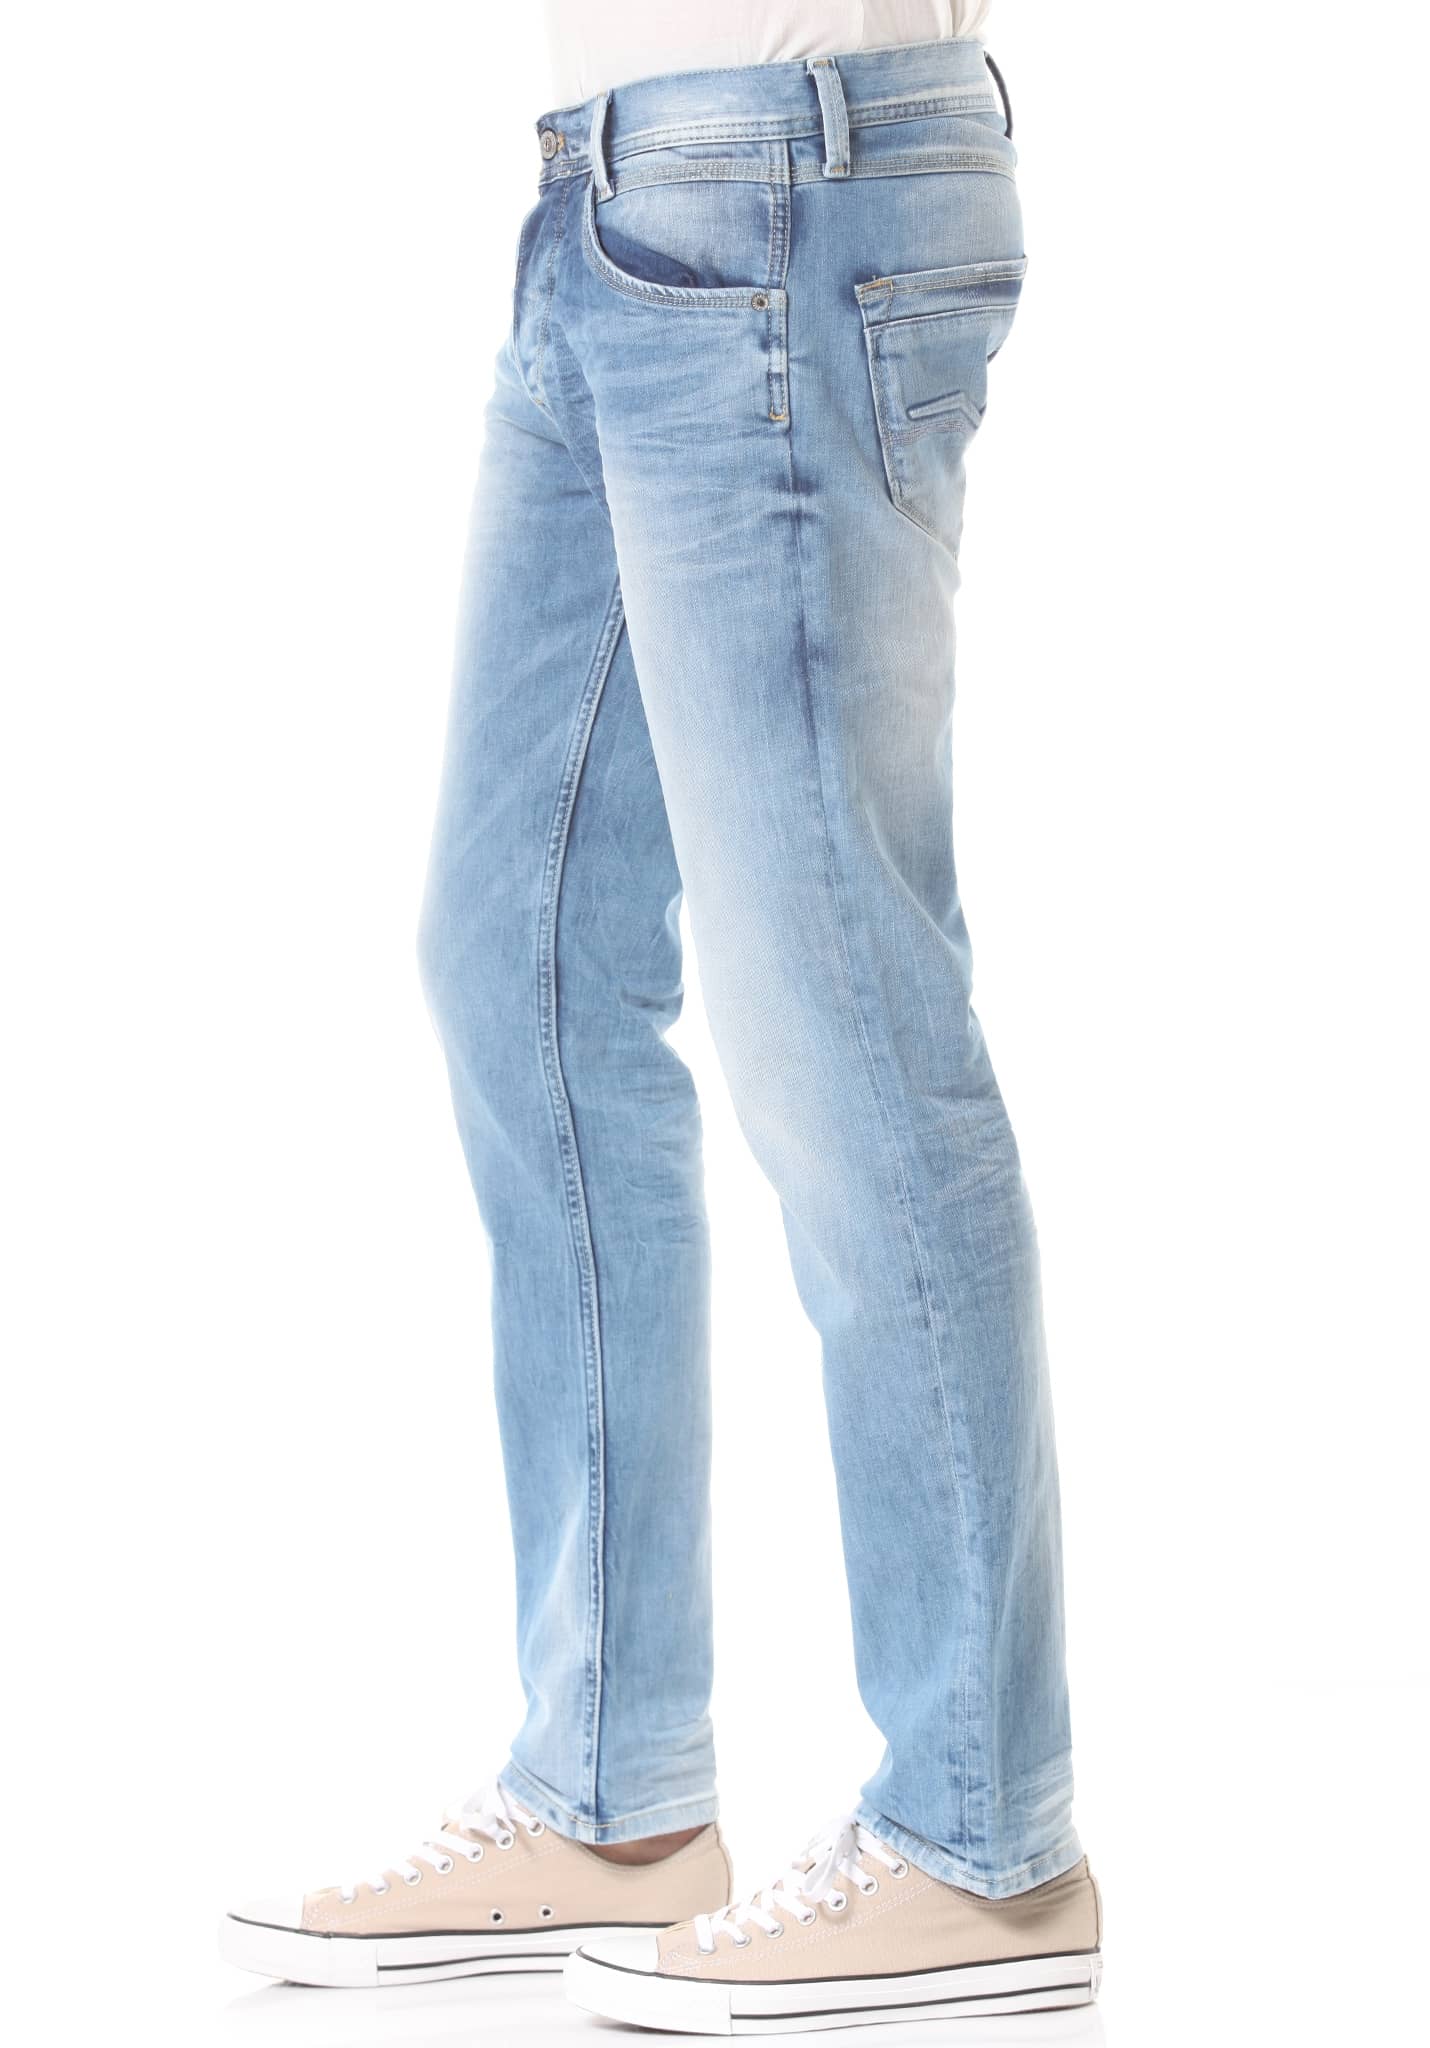 PEPE Jeans SPIKE CB2 Slim Fit Jeans Mittelblau Ice Shock Größe 30/32 oder 31/34 